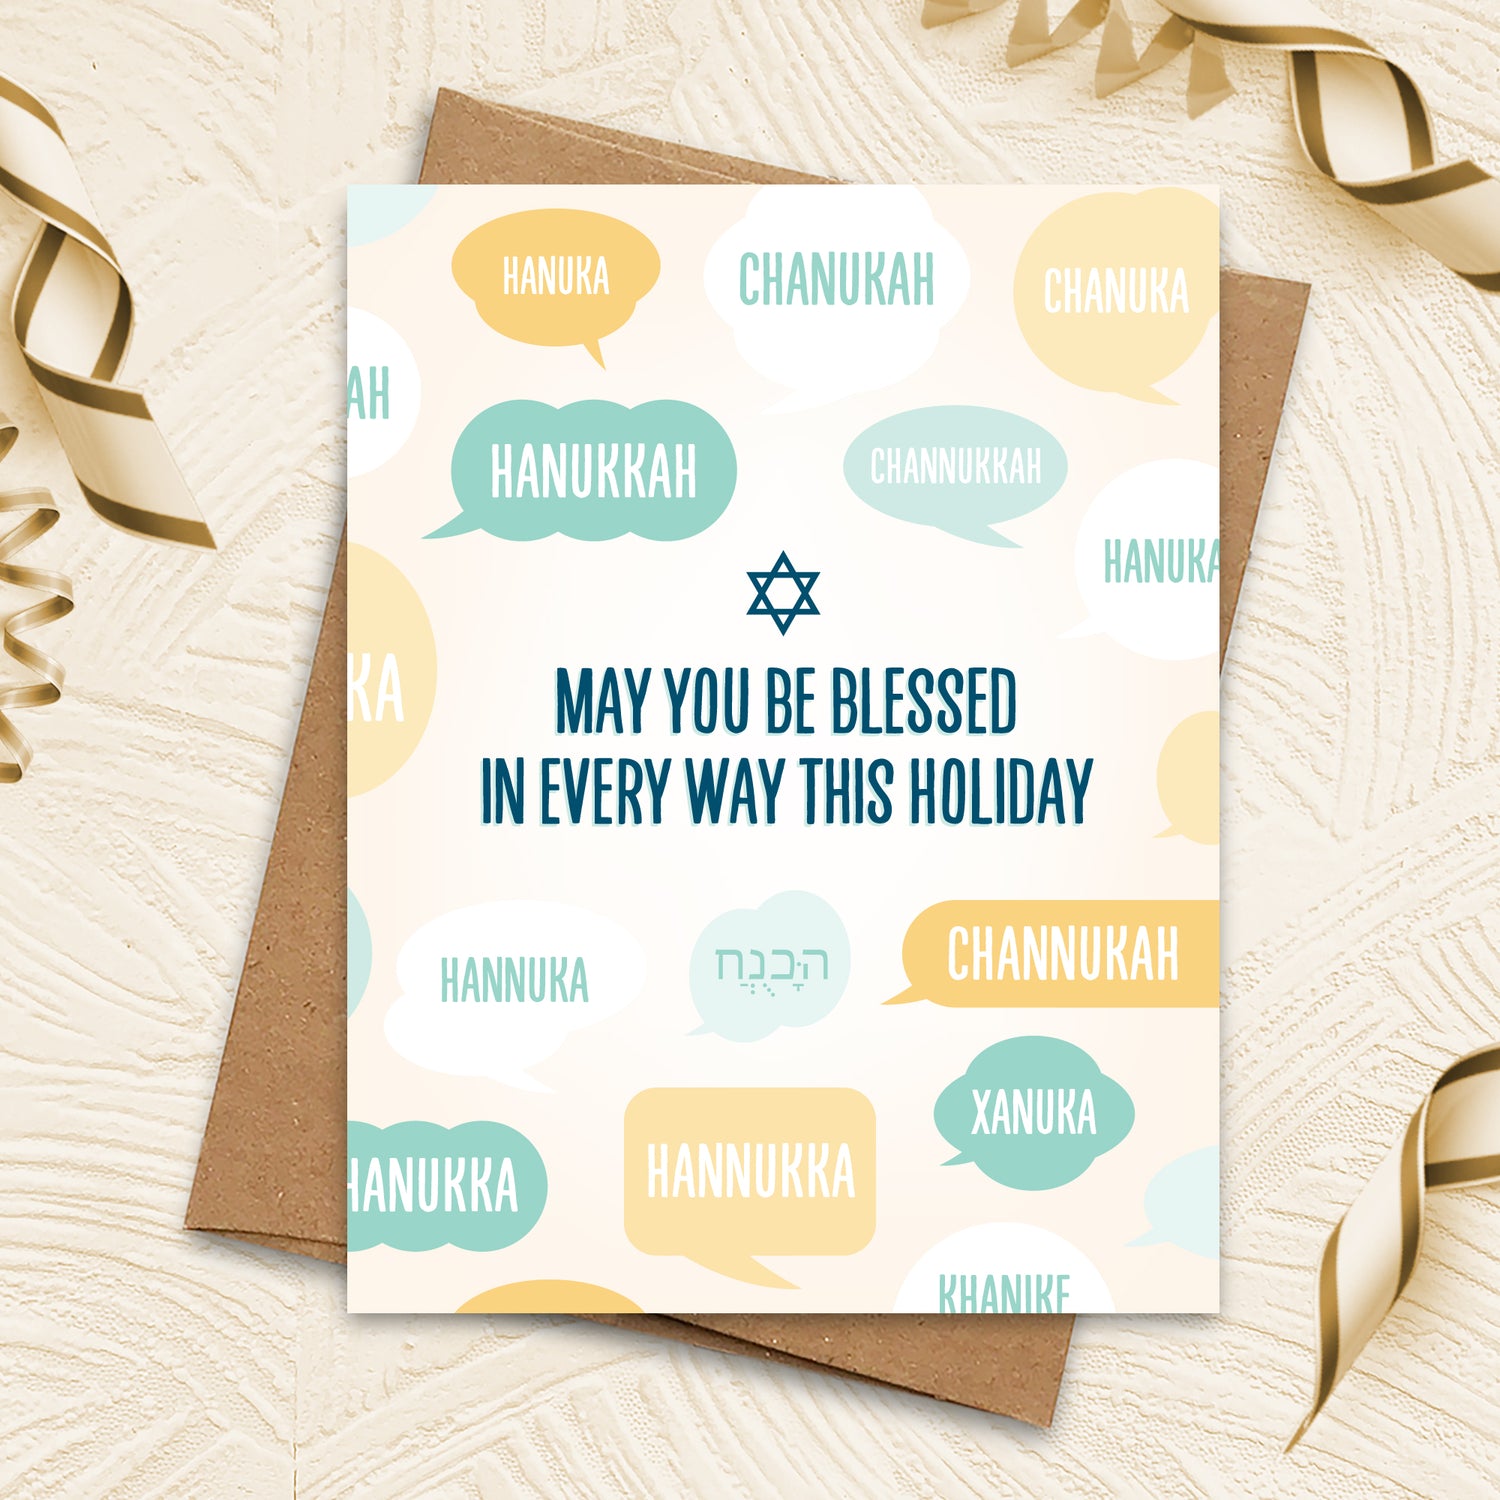 Hanukkah greeting cards by I&